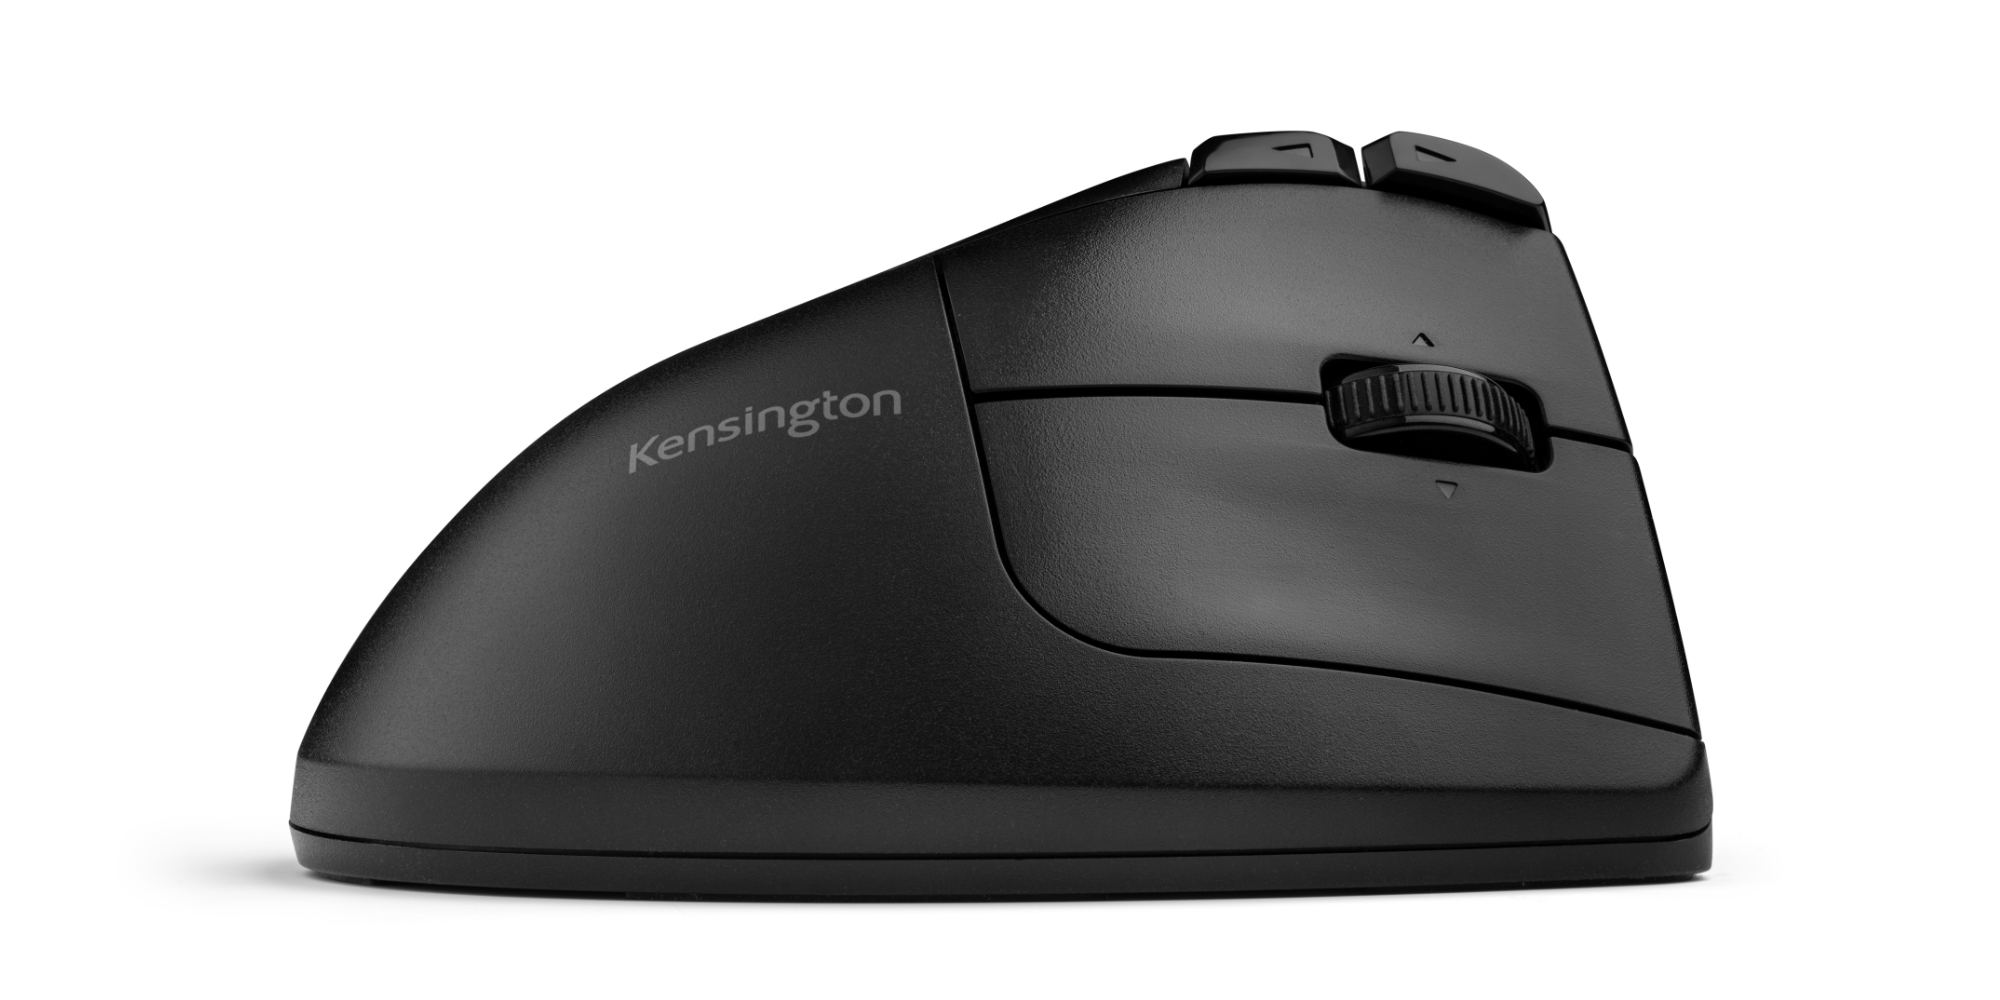 New Kensington ergonomic mouse has 9 customizable buttons - 9to5Toys